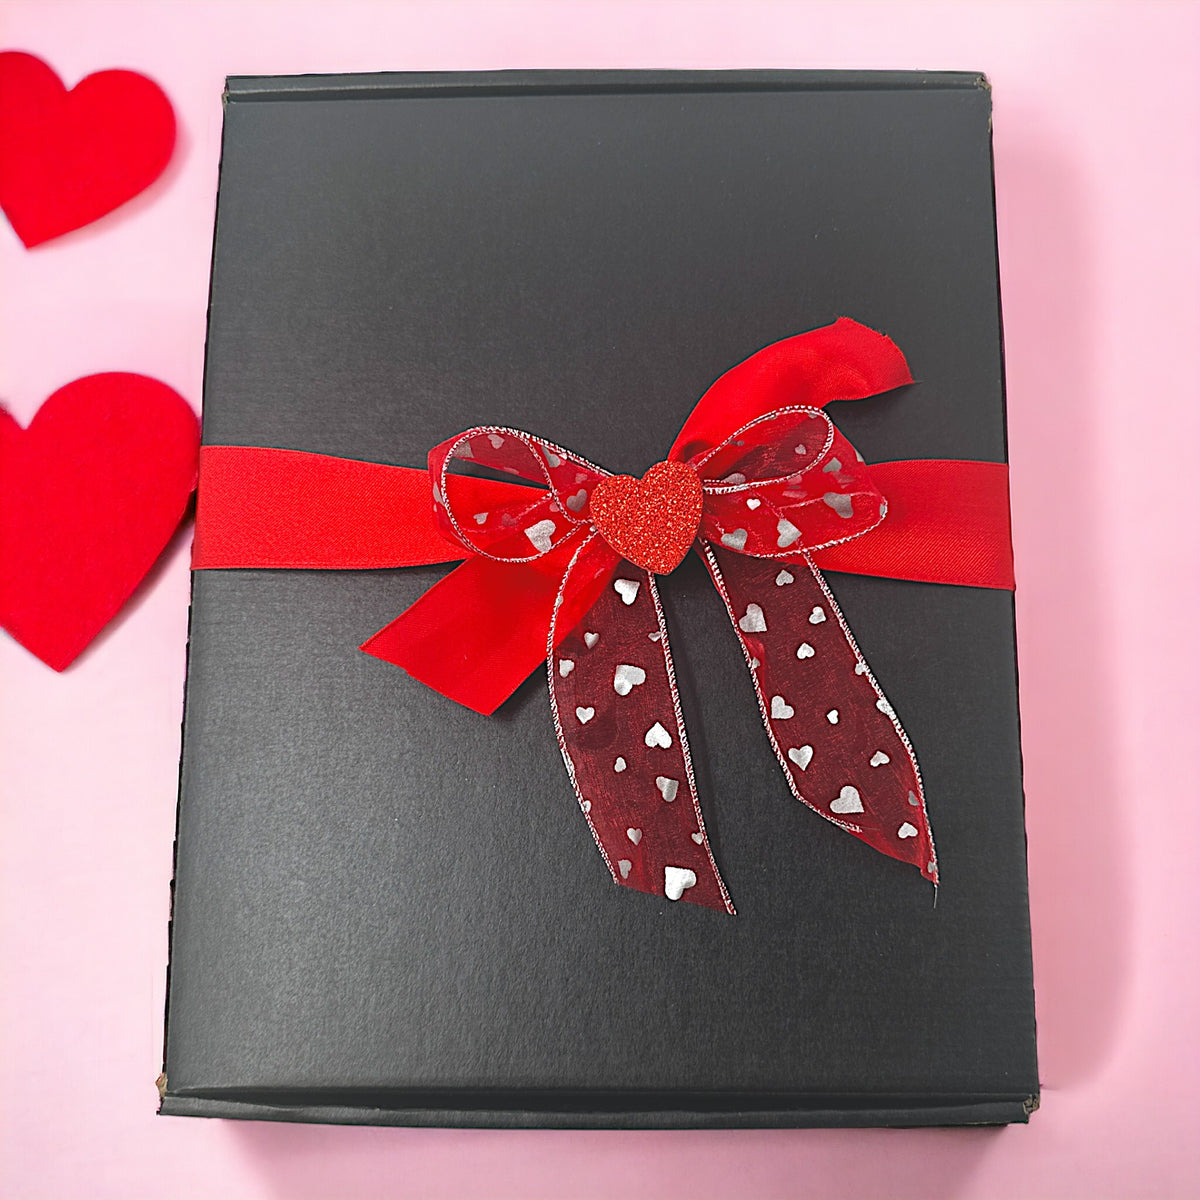 Cocoa Amore: The Ultimate Chocolate Love Box